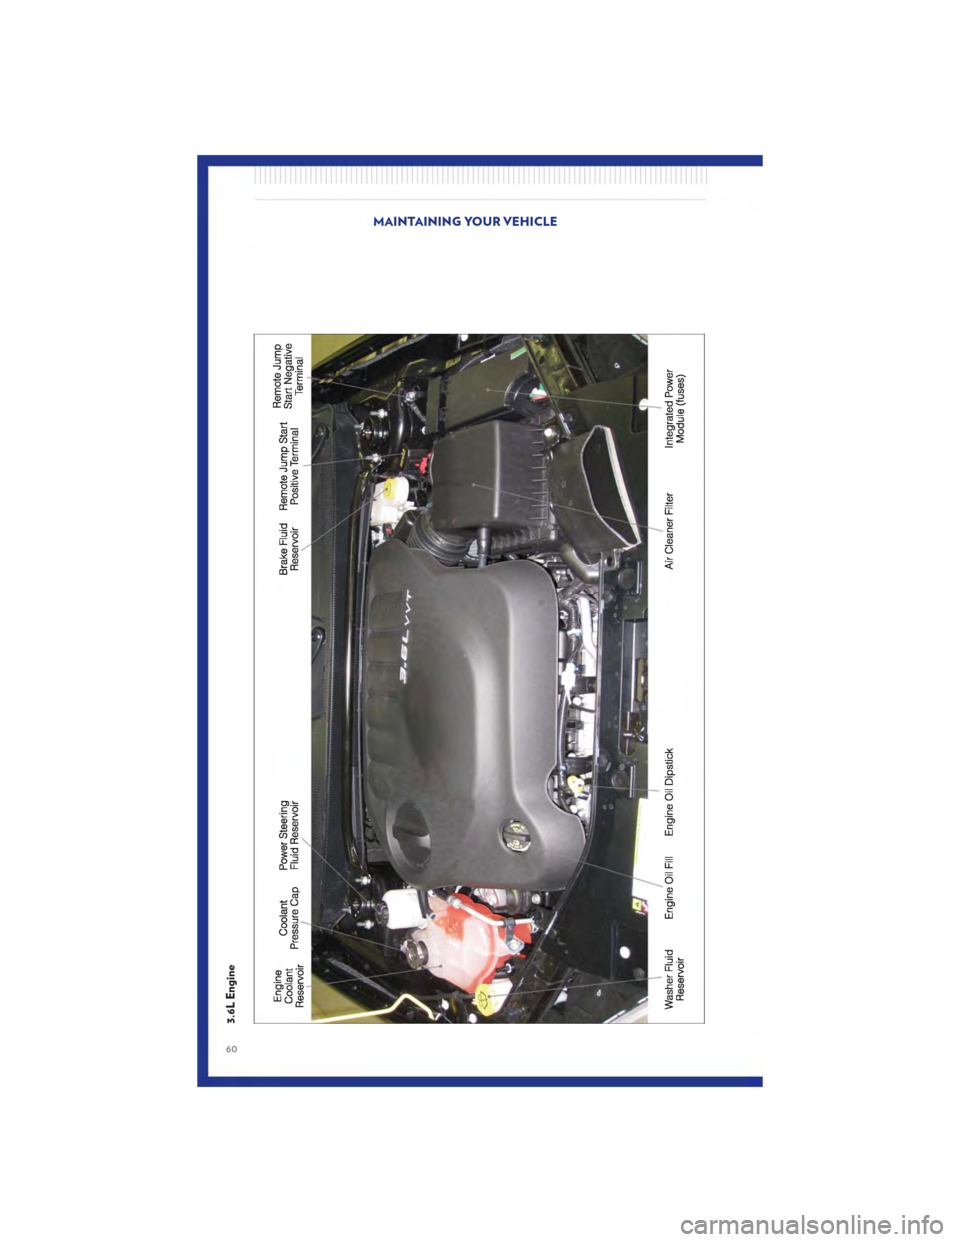 CHRYSLER 200 2011 1.G Repair Manual 3.6L Engine
MAINTAINING YOUR VEHICLE
60 